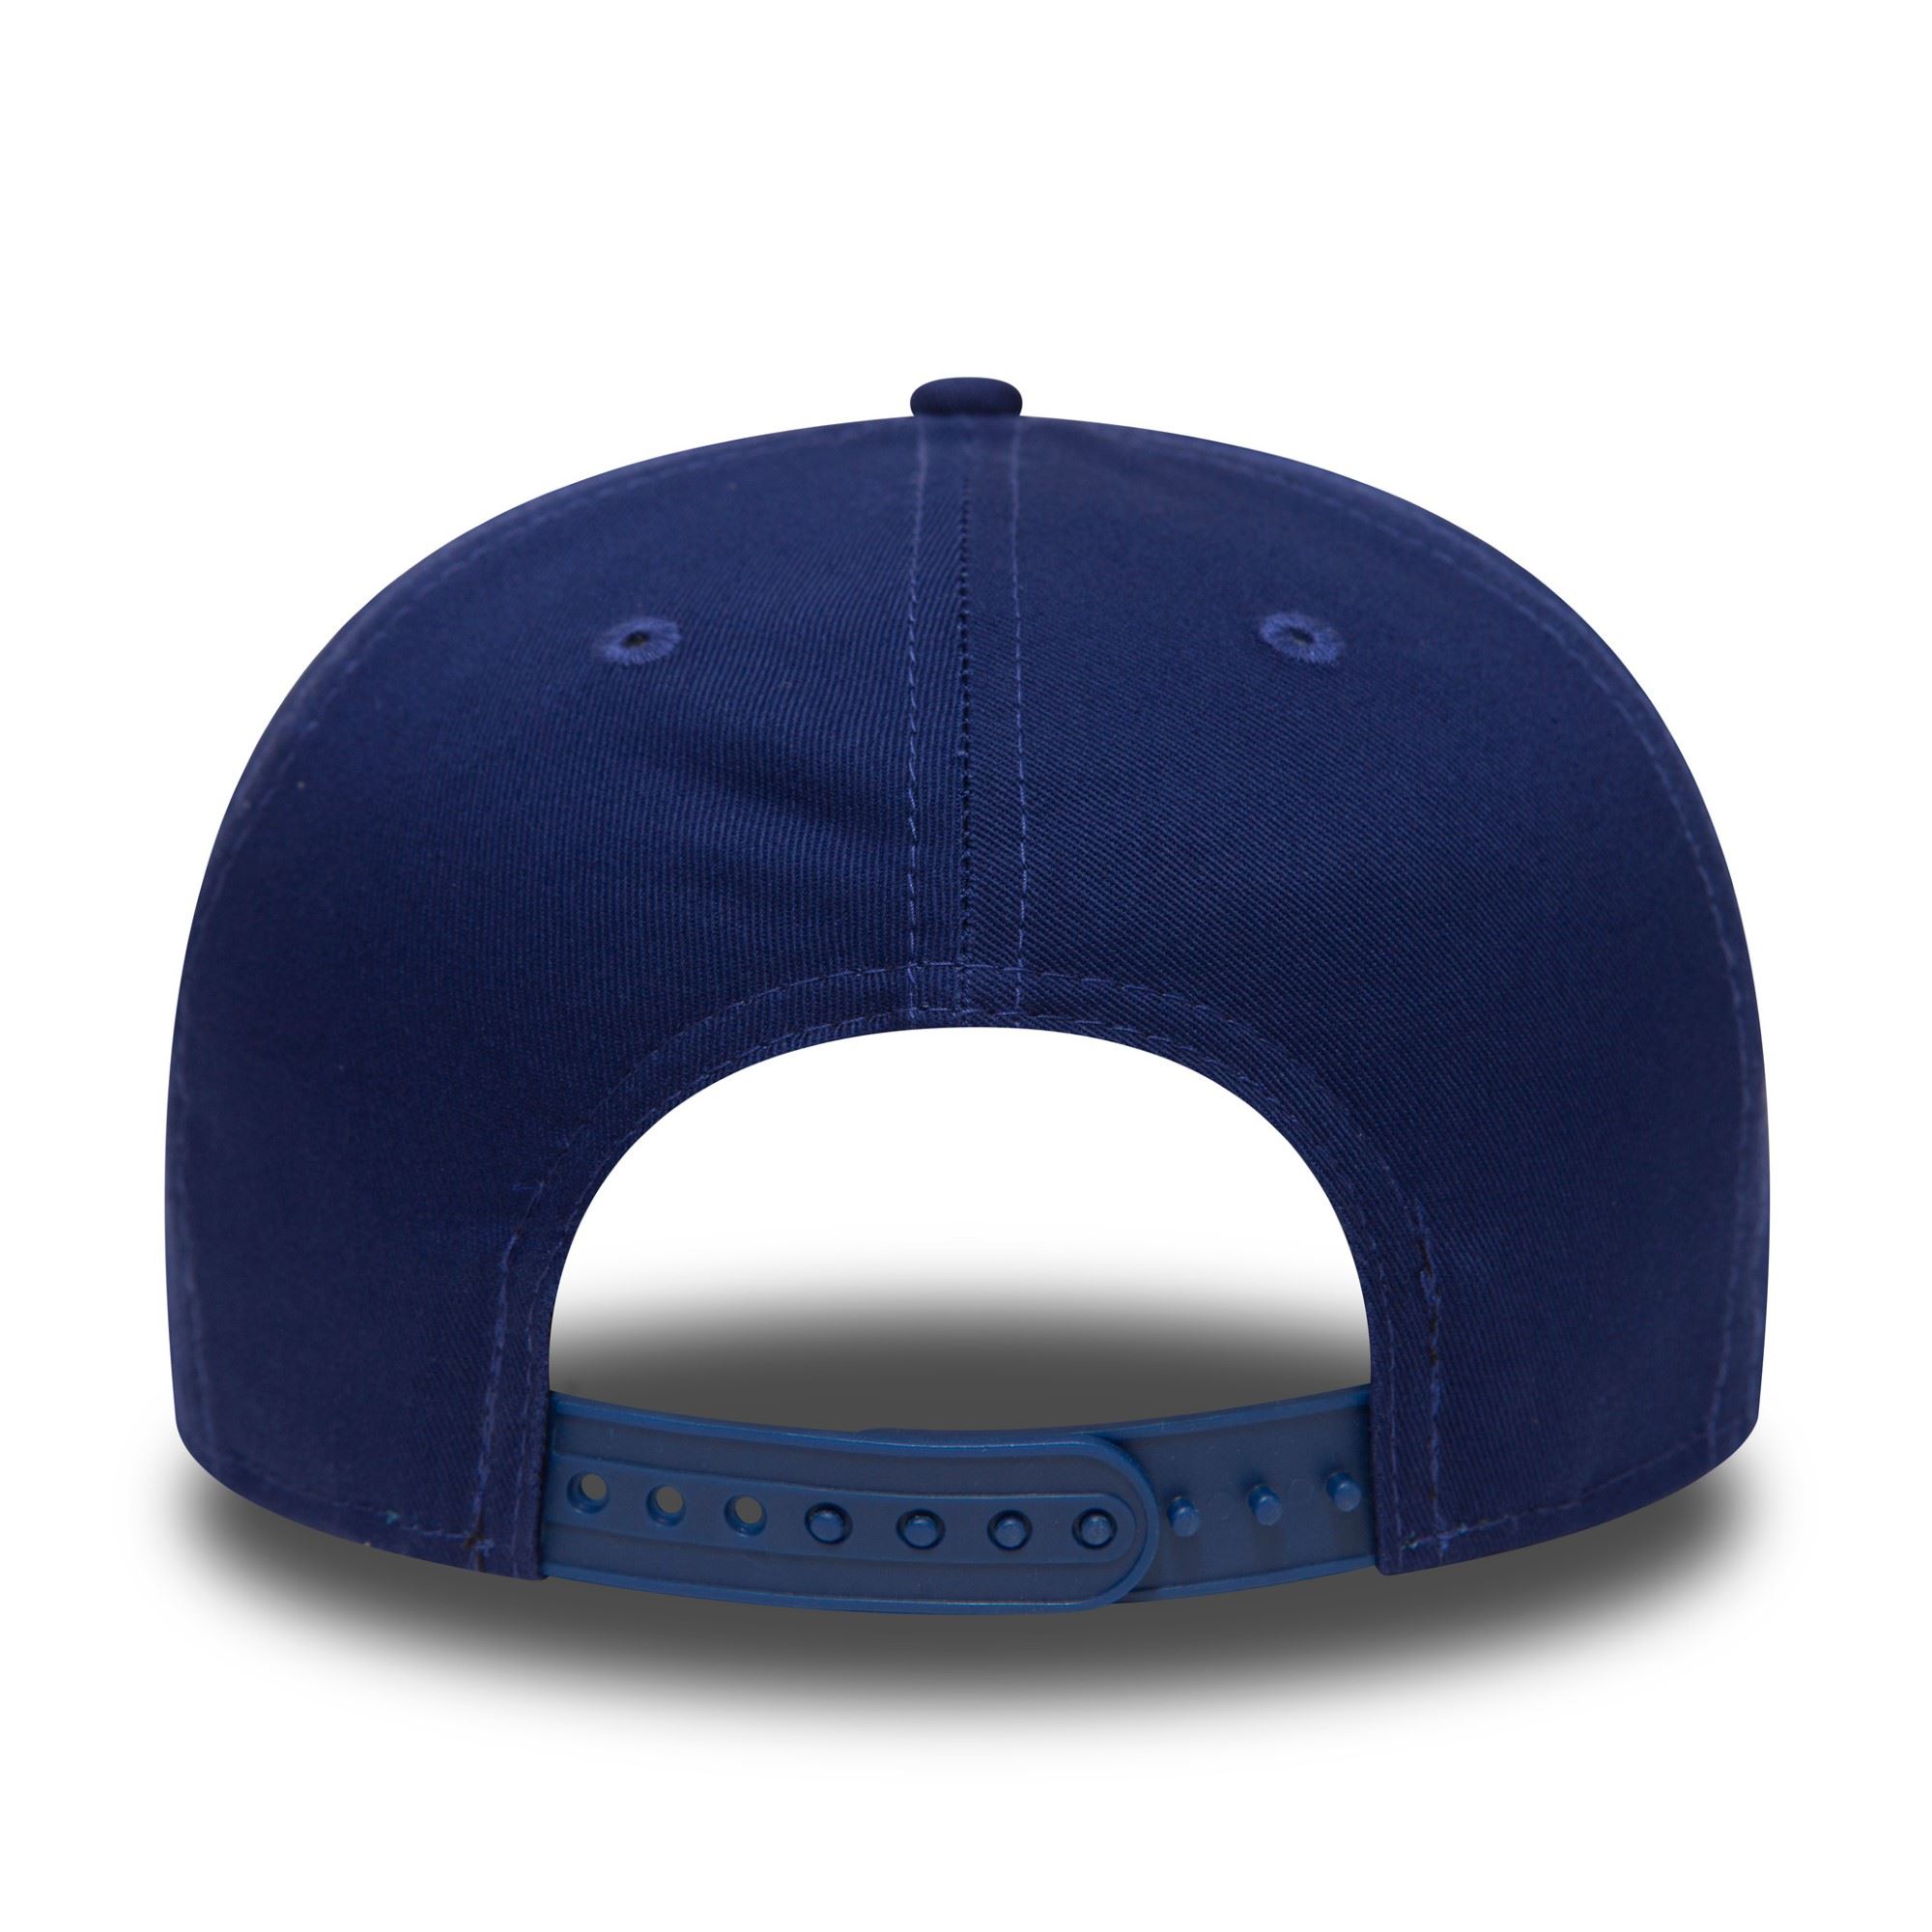 Los Angeles Dodgers MLB Essentials Blau Verstellbare 9Fifty Snapback Cap New Era